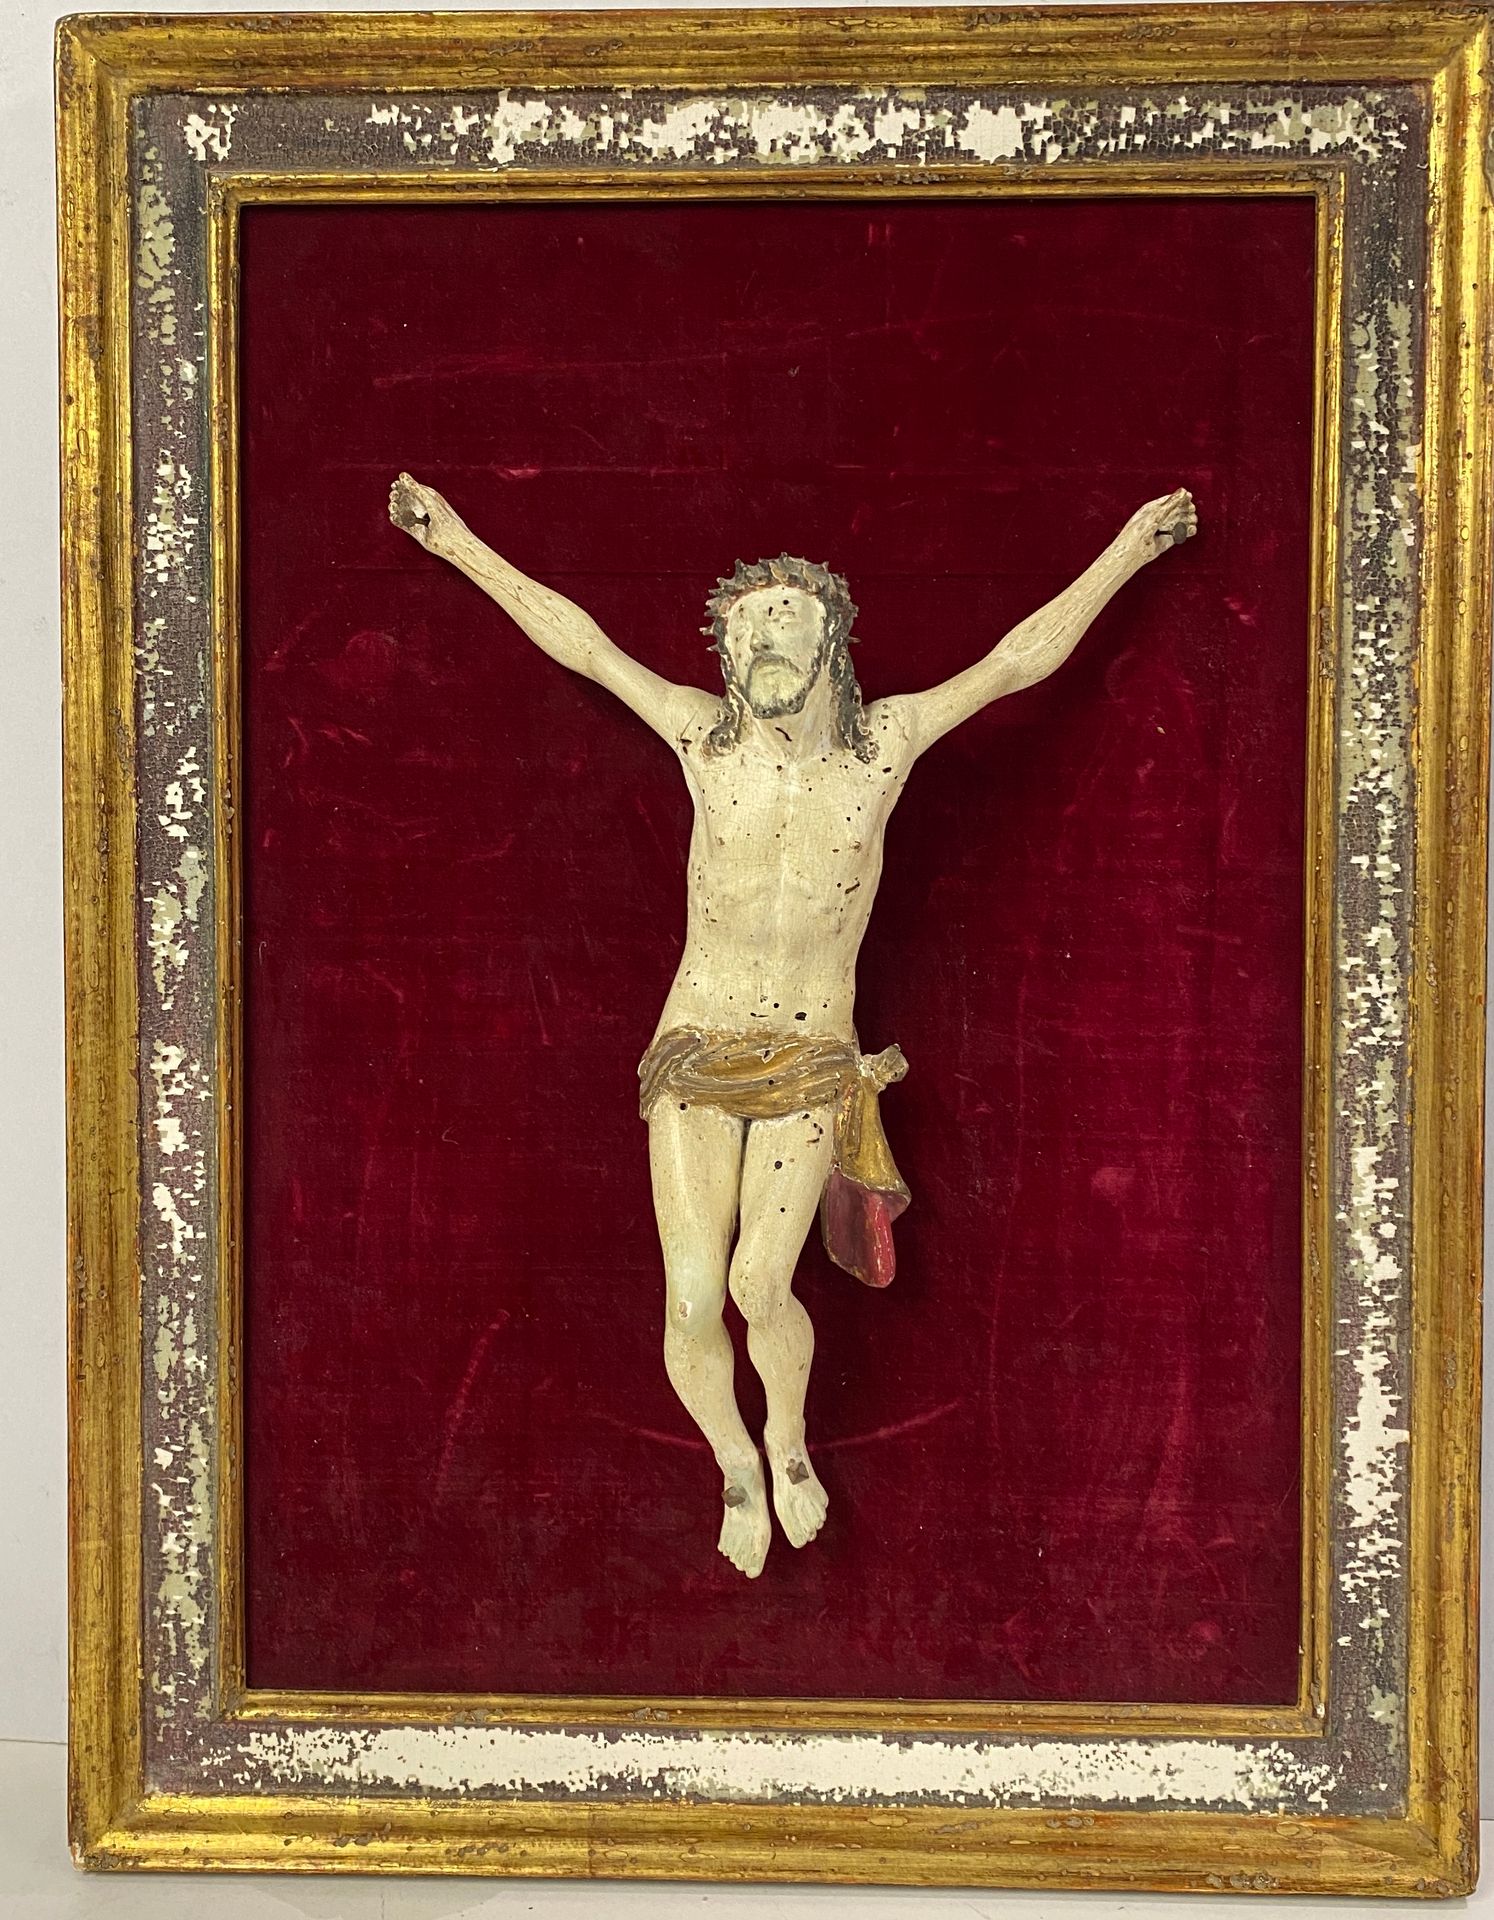 Null Cristo in legno policromo

H. 30cm